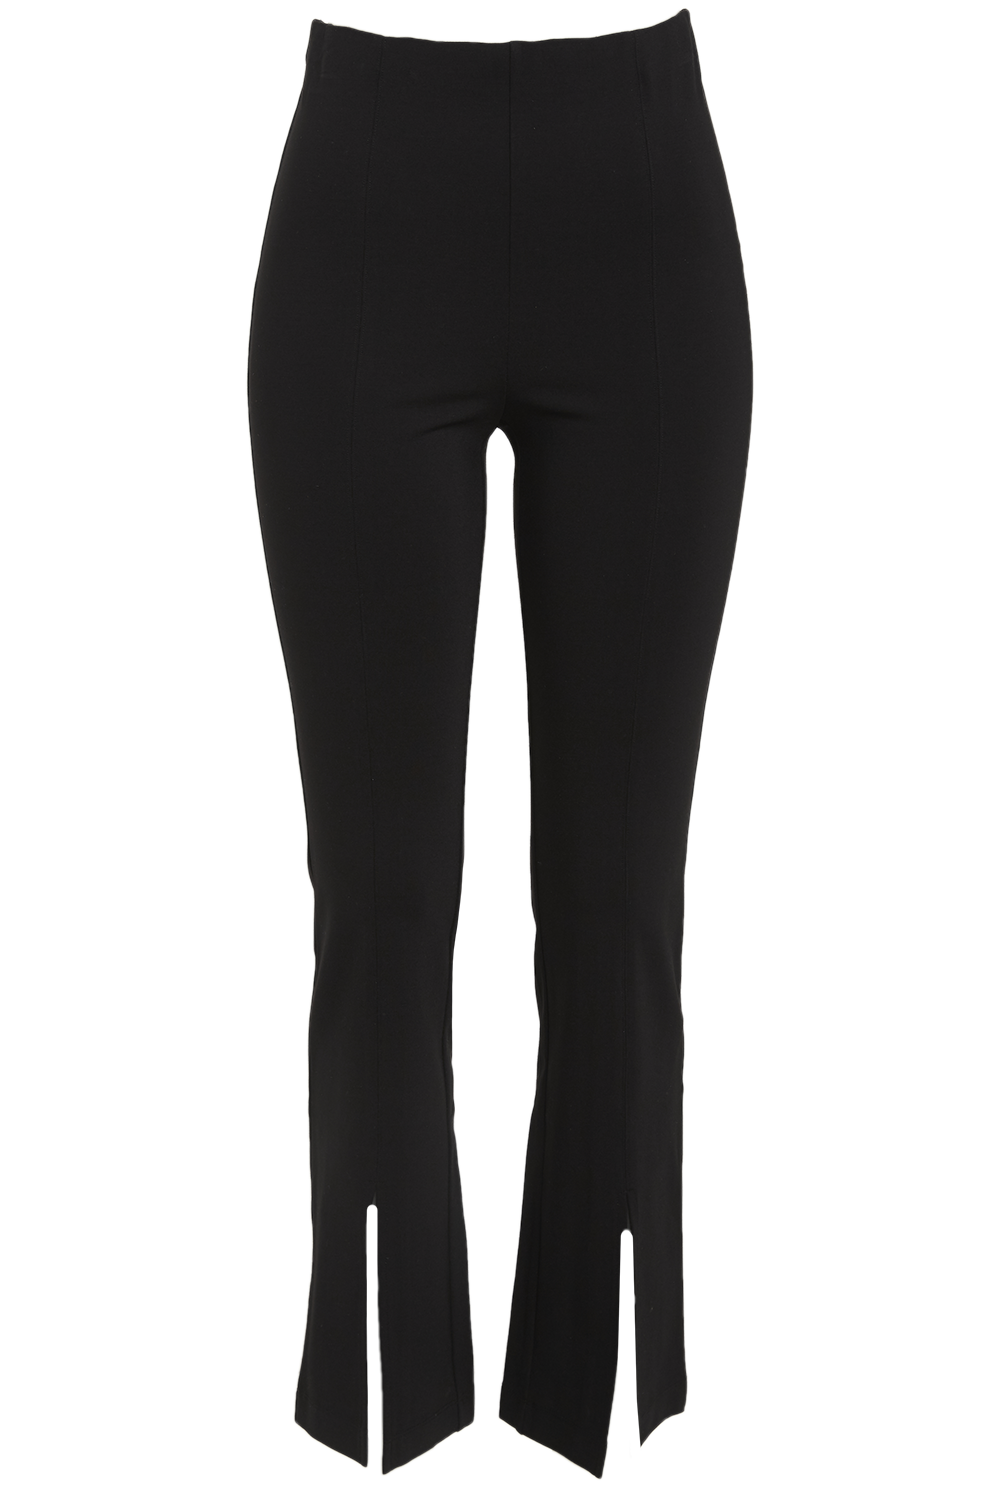 Femme Luxe slit front pants in black | ASOS